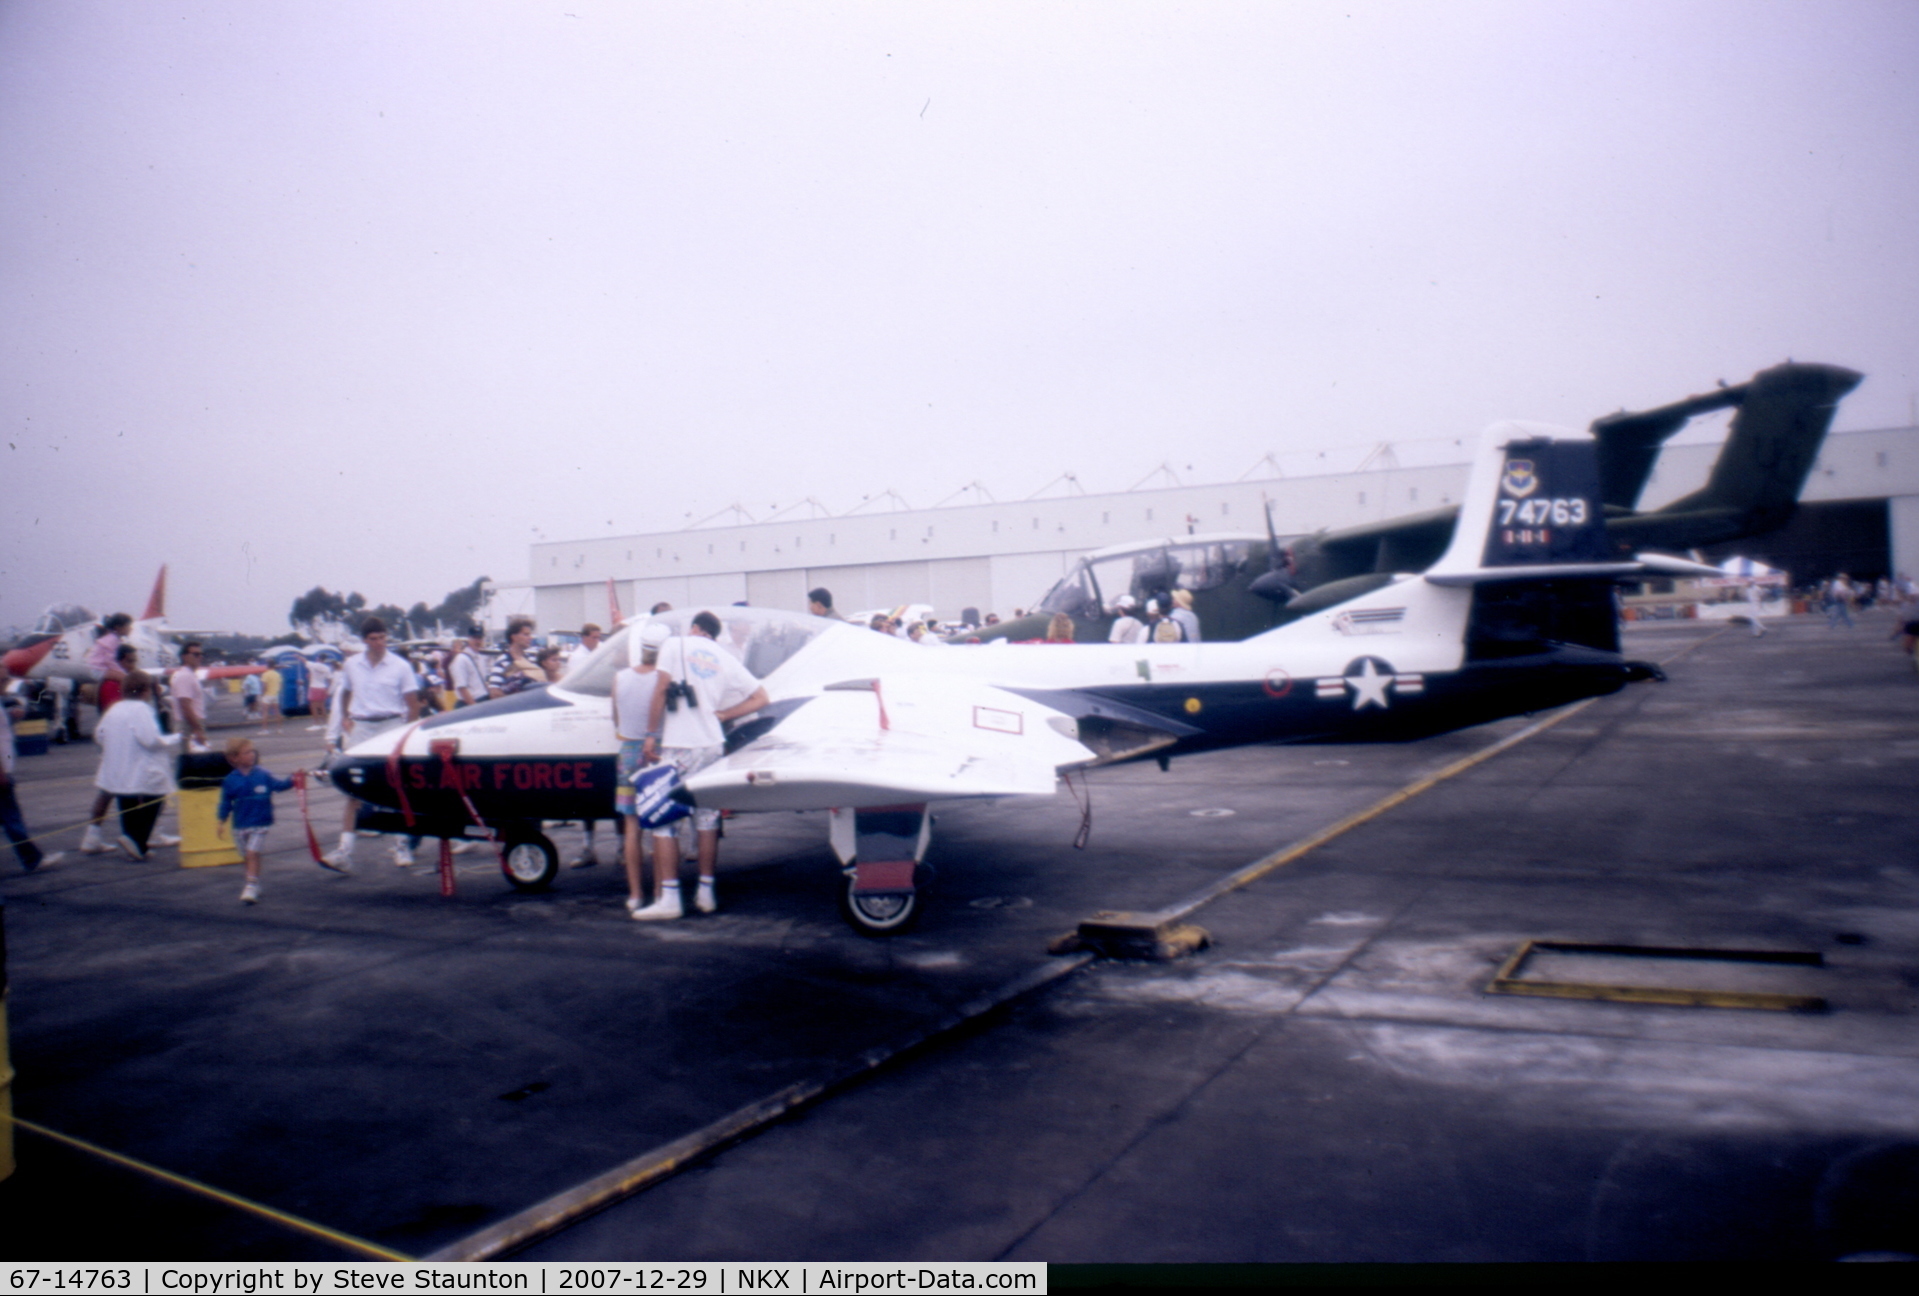 67-14763, 1967 Cessna T-37B Tweety Bird C/N 41027, Taken at NAS Miramar Airshow in 1988 (scan of a slide)